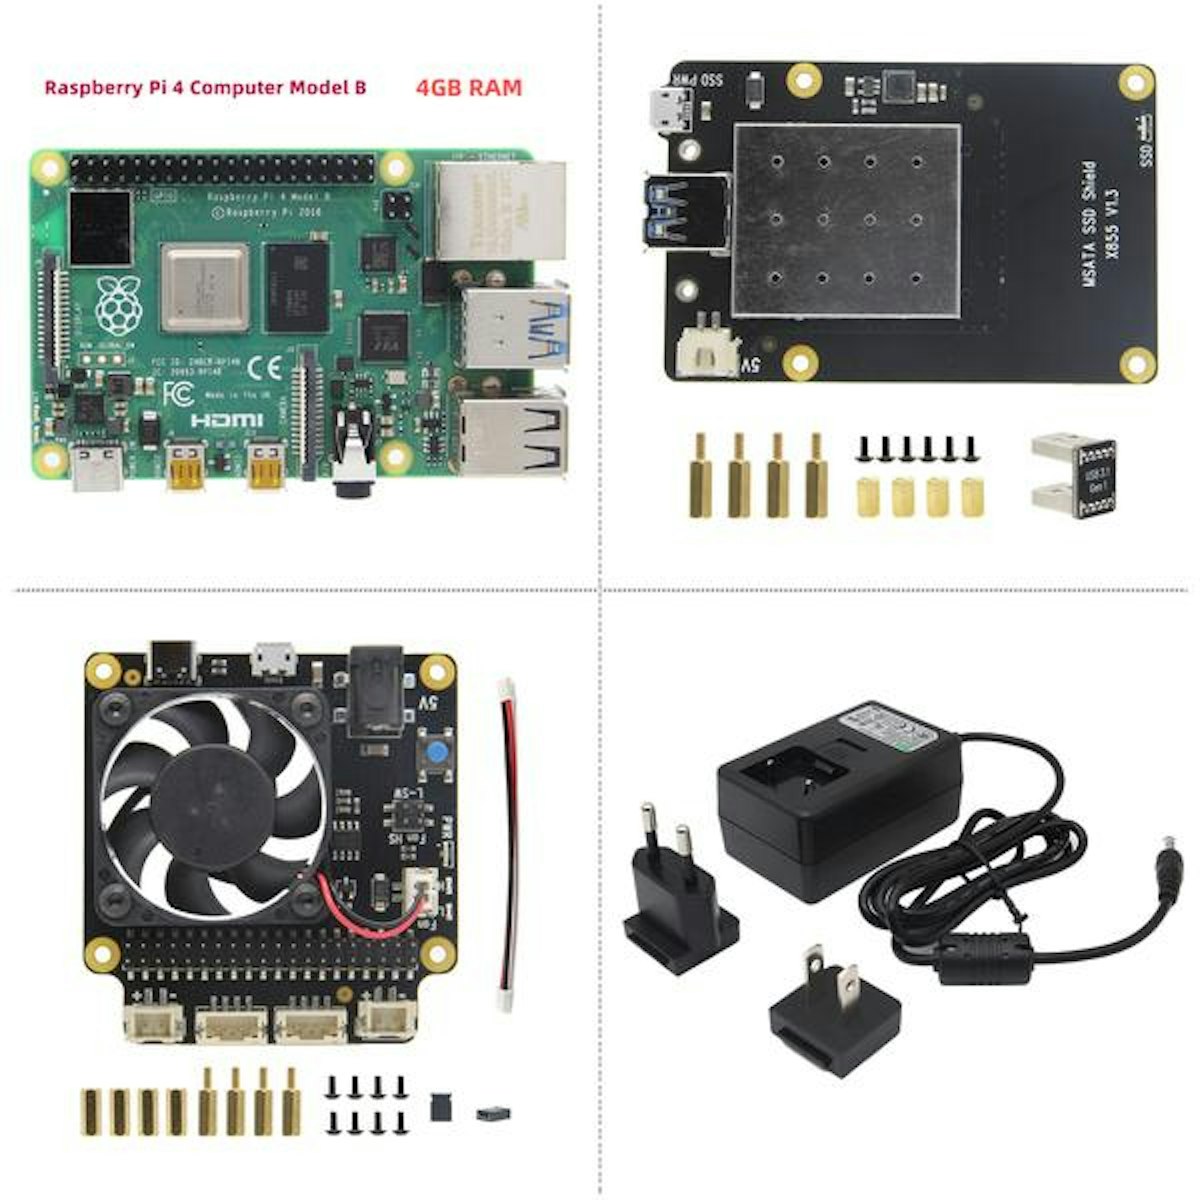 featured image - Raspberry Pi 4b mSata-SSD vs MicroSD